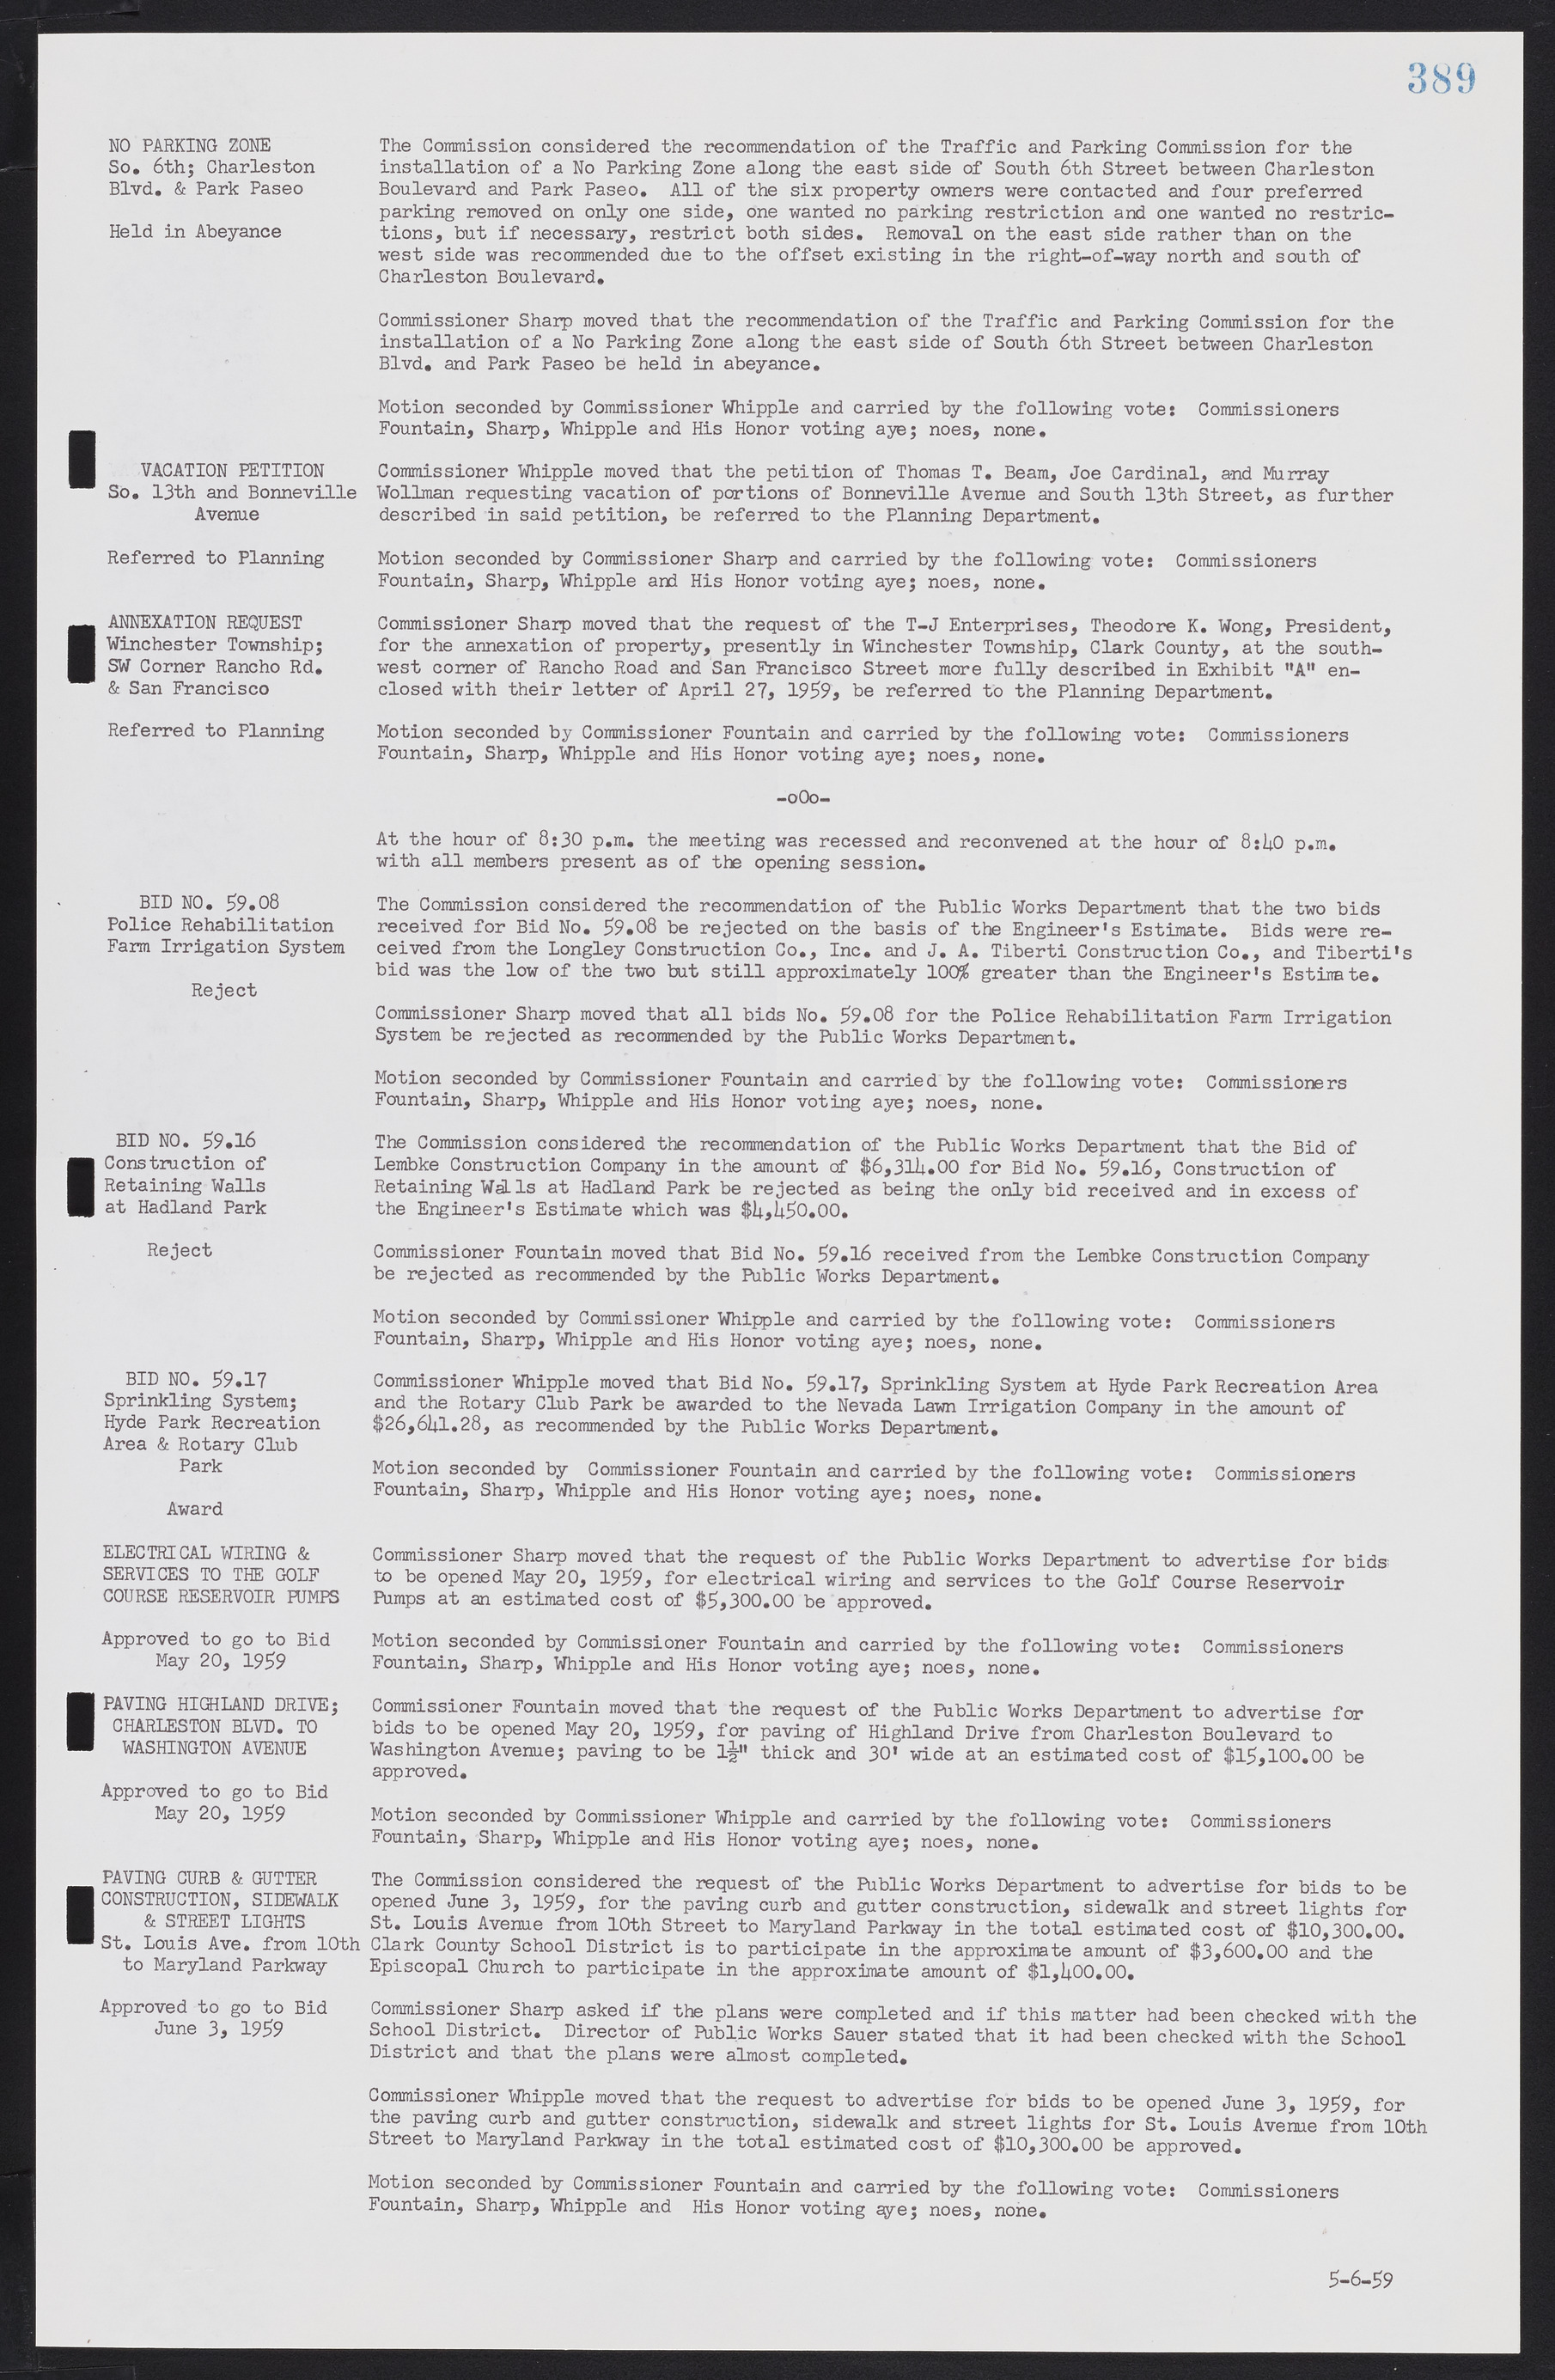 Las Vegas City Commission Minutes, November 20, 1957 to December 2, 1959, lvc000011-425